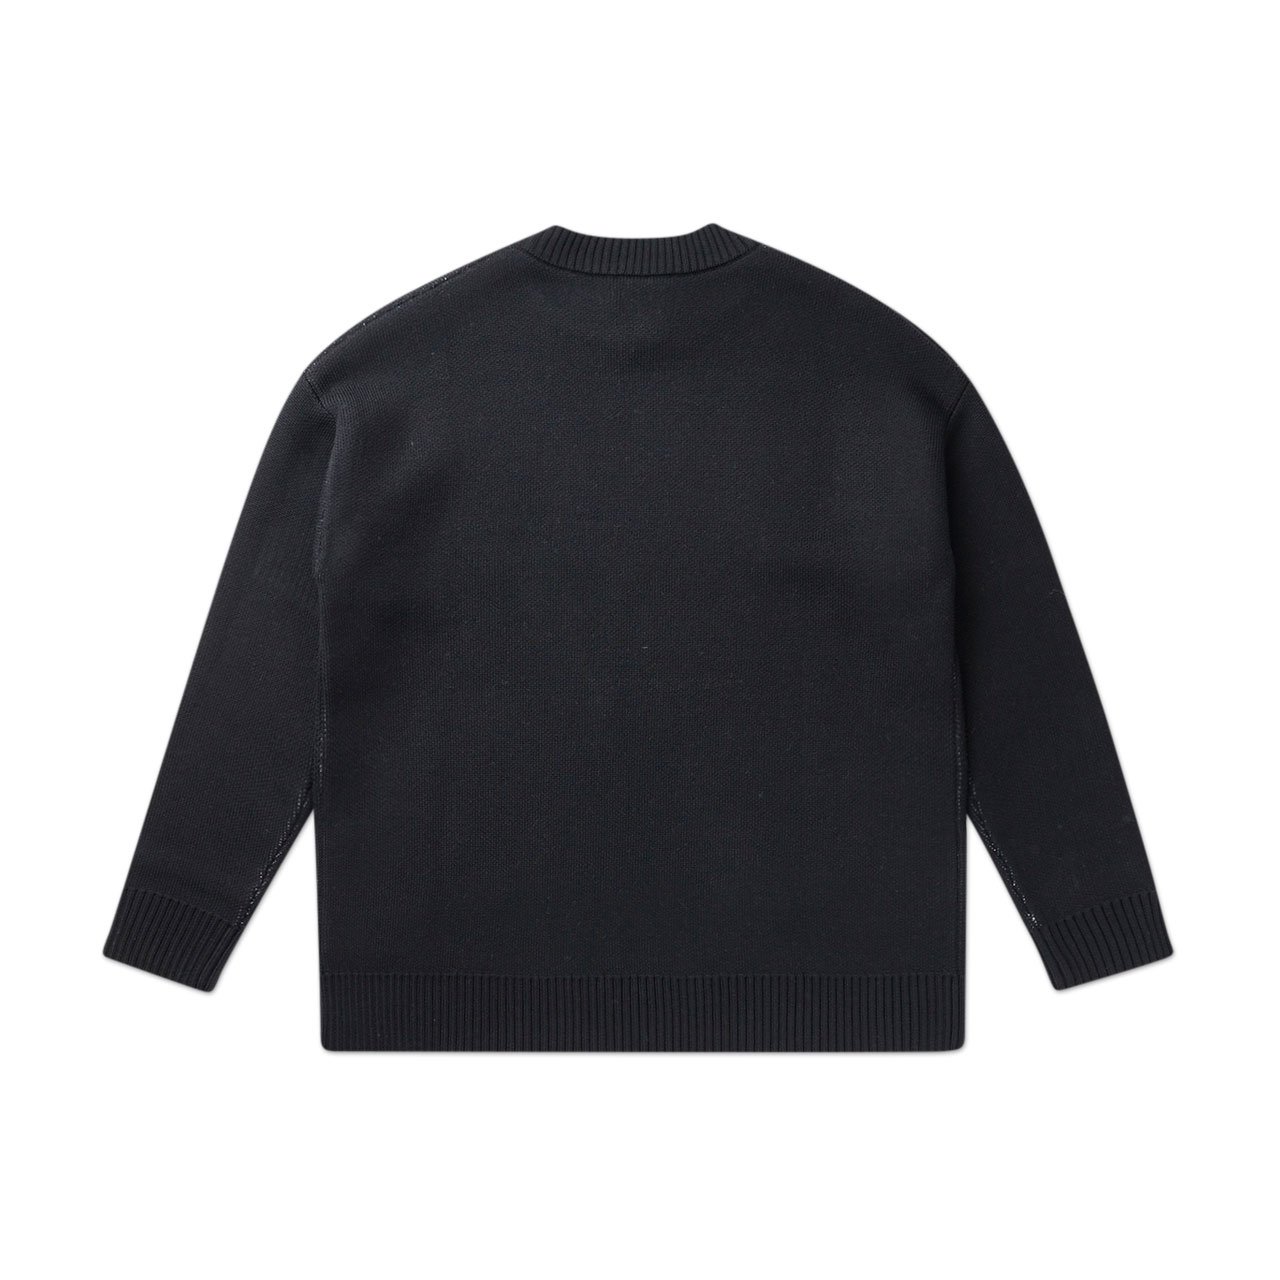 the north face black series steep tech knit top (black) - nf0a4qy3jk31 - a.plus - Image - 2